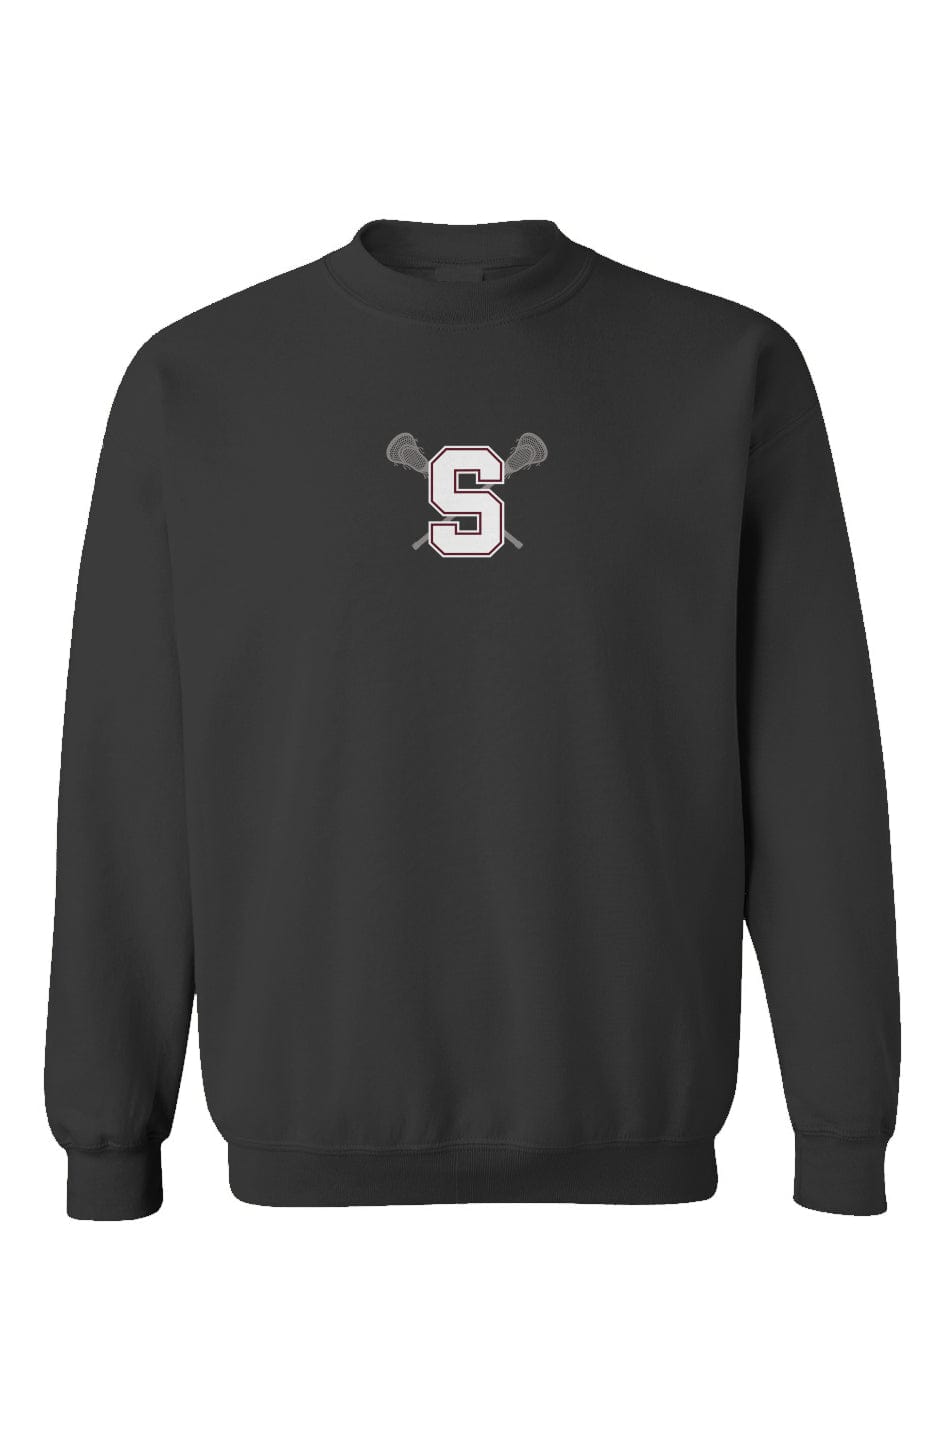 State College LC Premium Youth Sweatshirt Signature Lacrosse